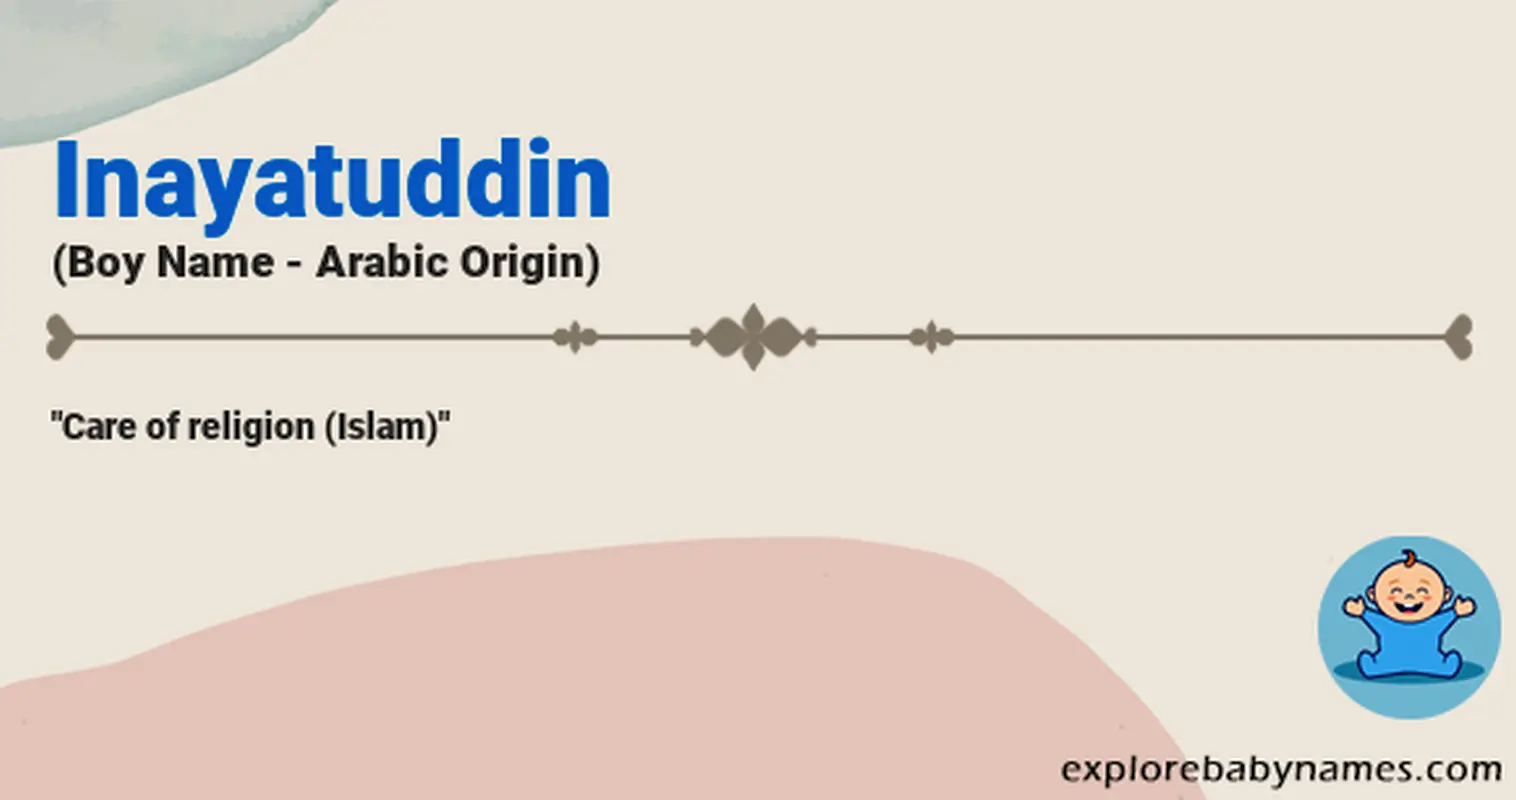 Meaning of Inayatuddin